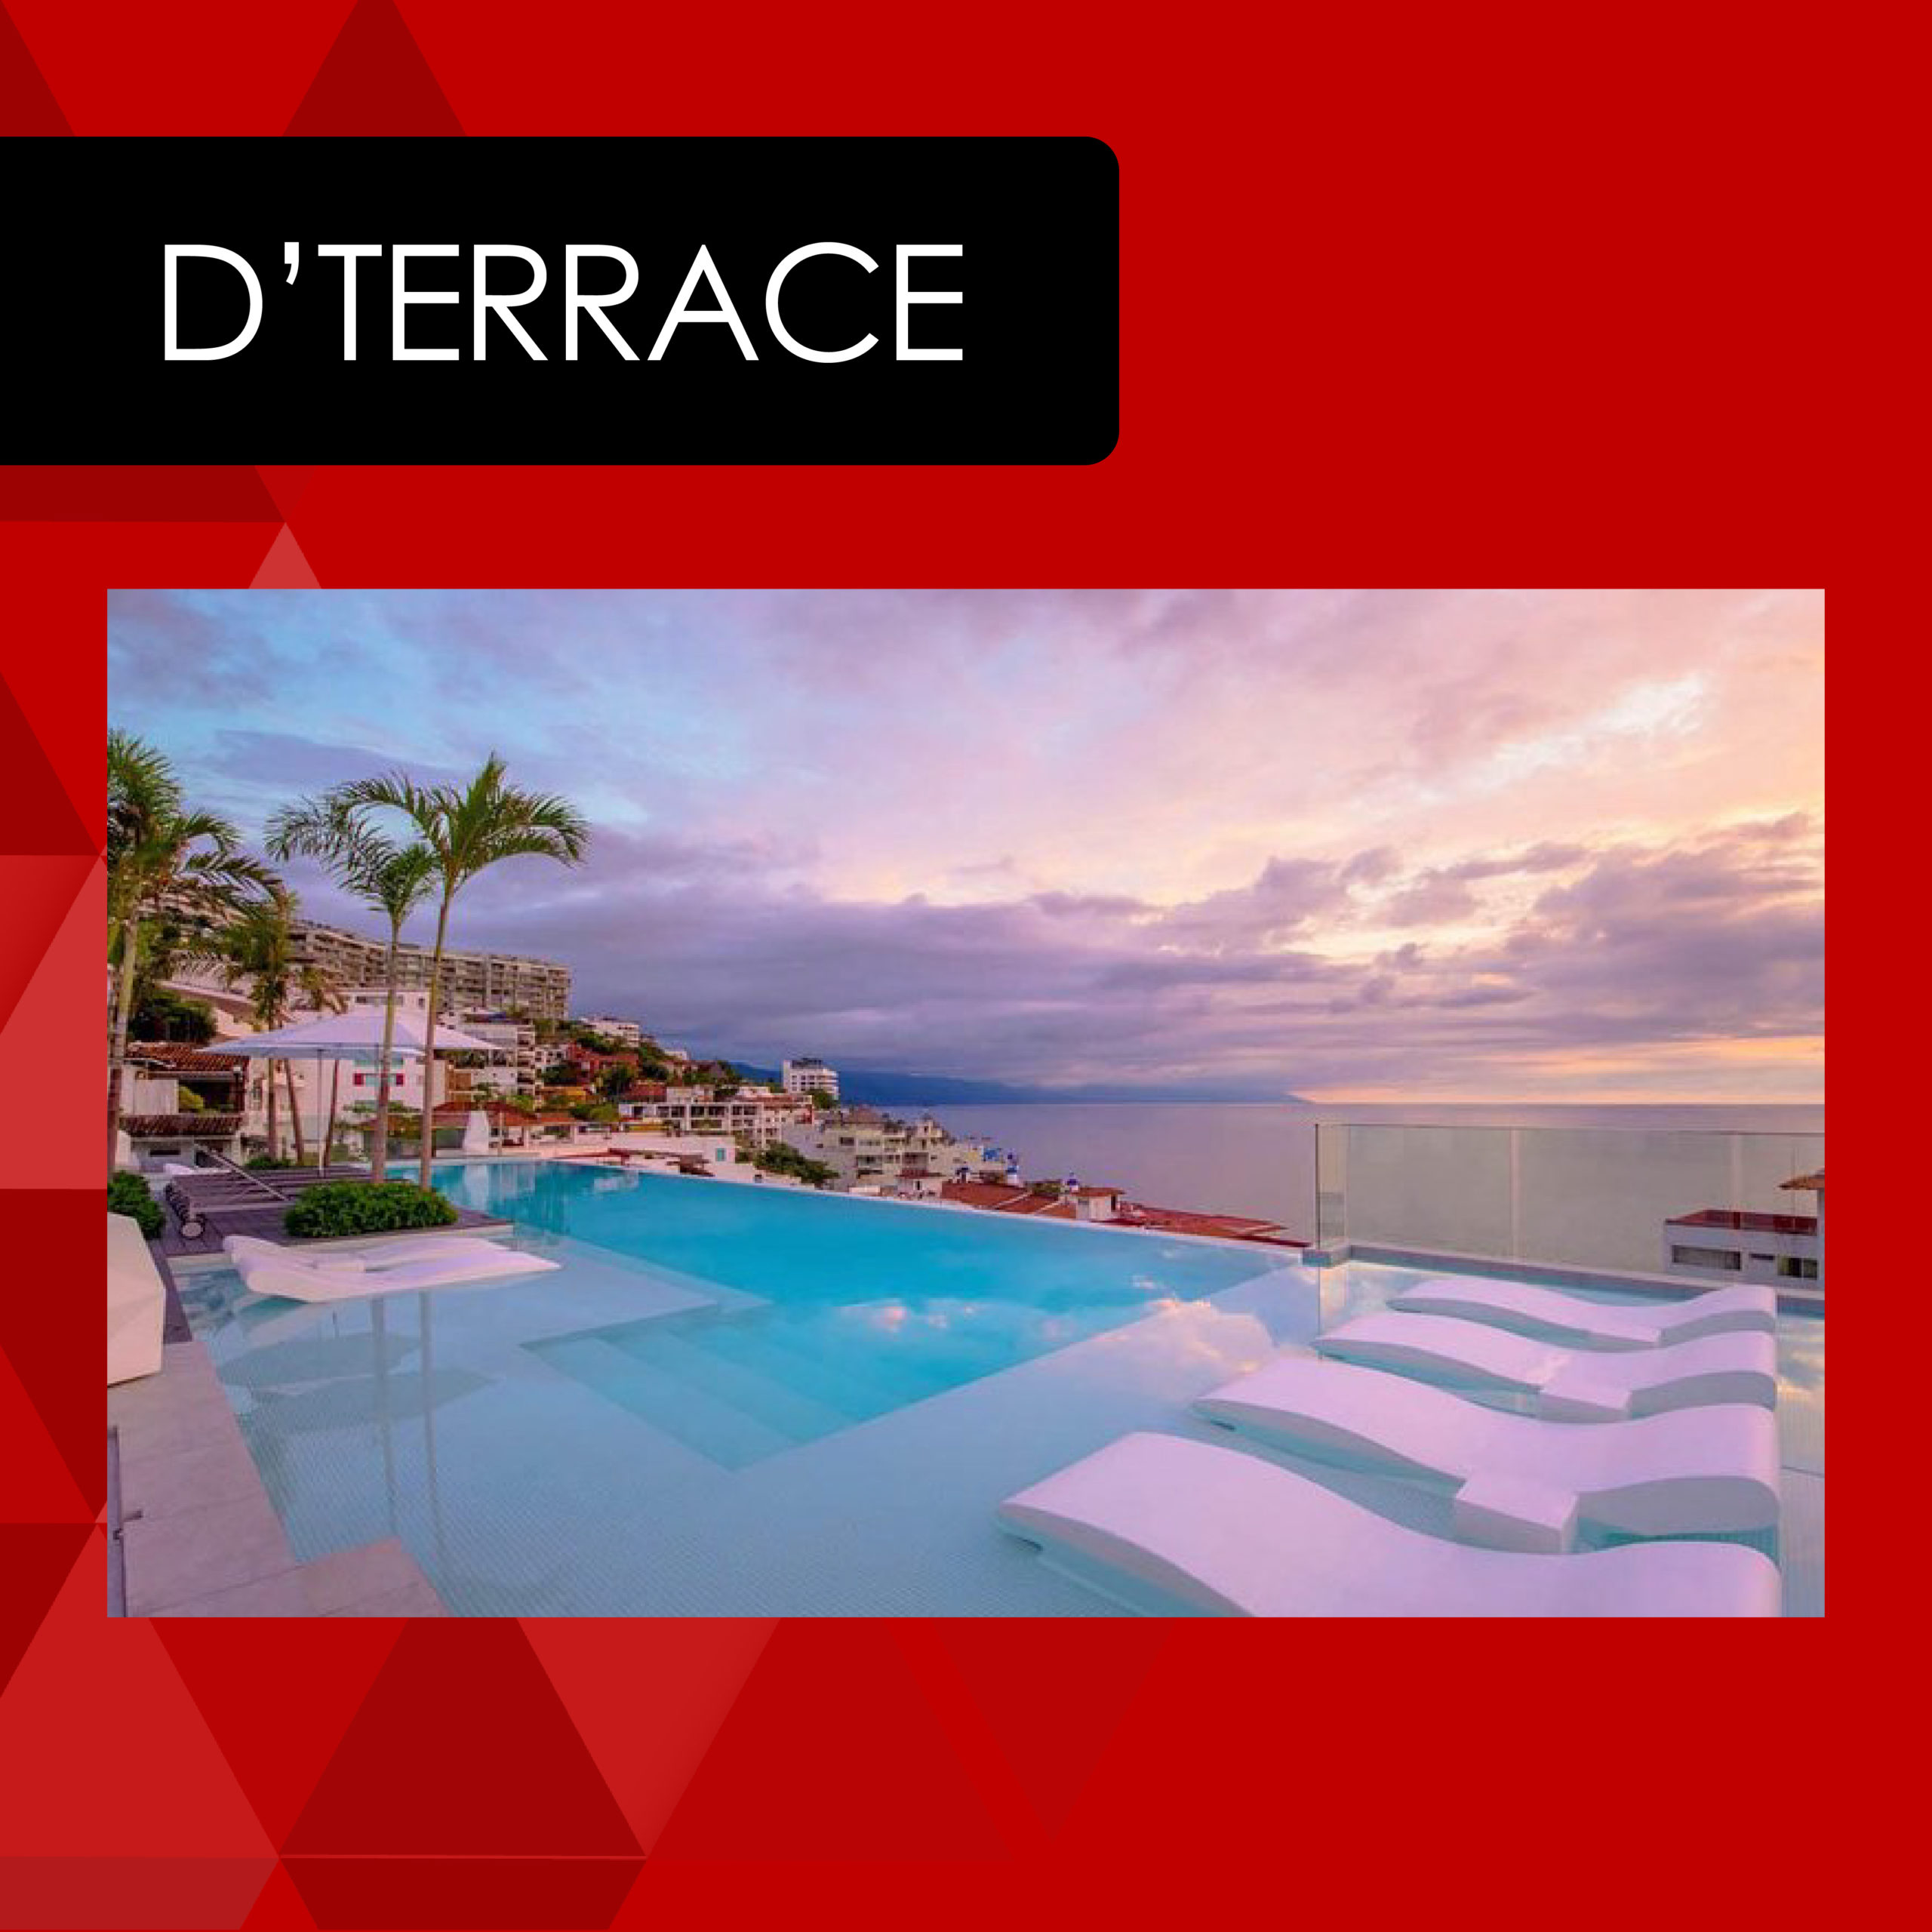 D'Terrace